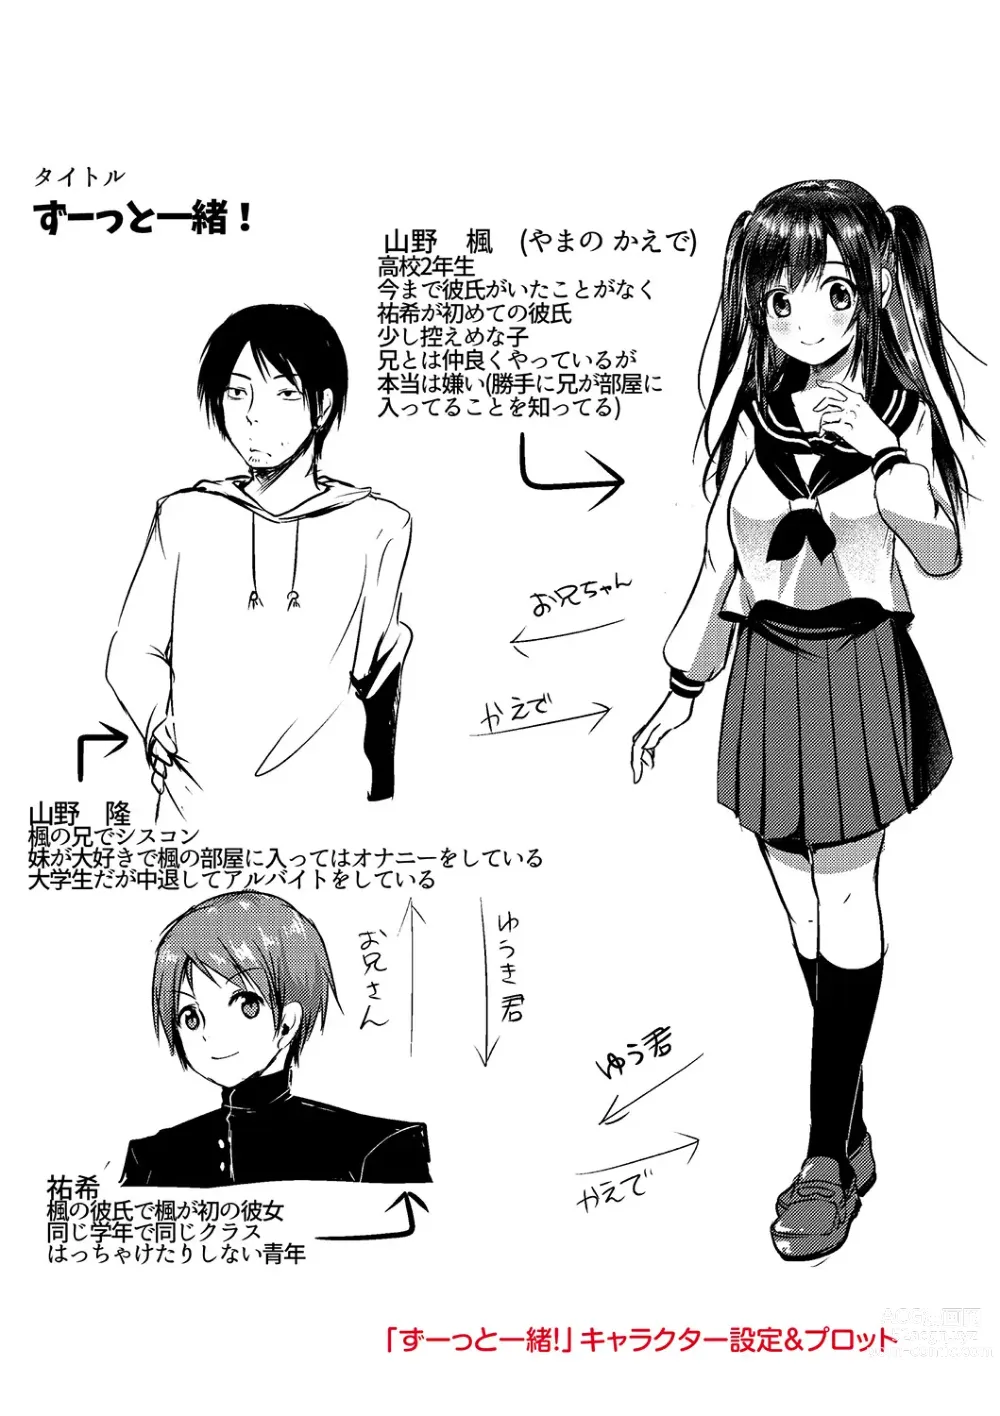 Page 214 of manga Kowashite Asobo + DLsite Gentei Chara Settei & Plot